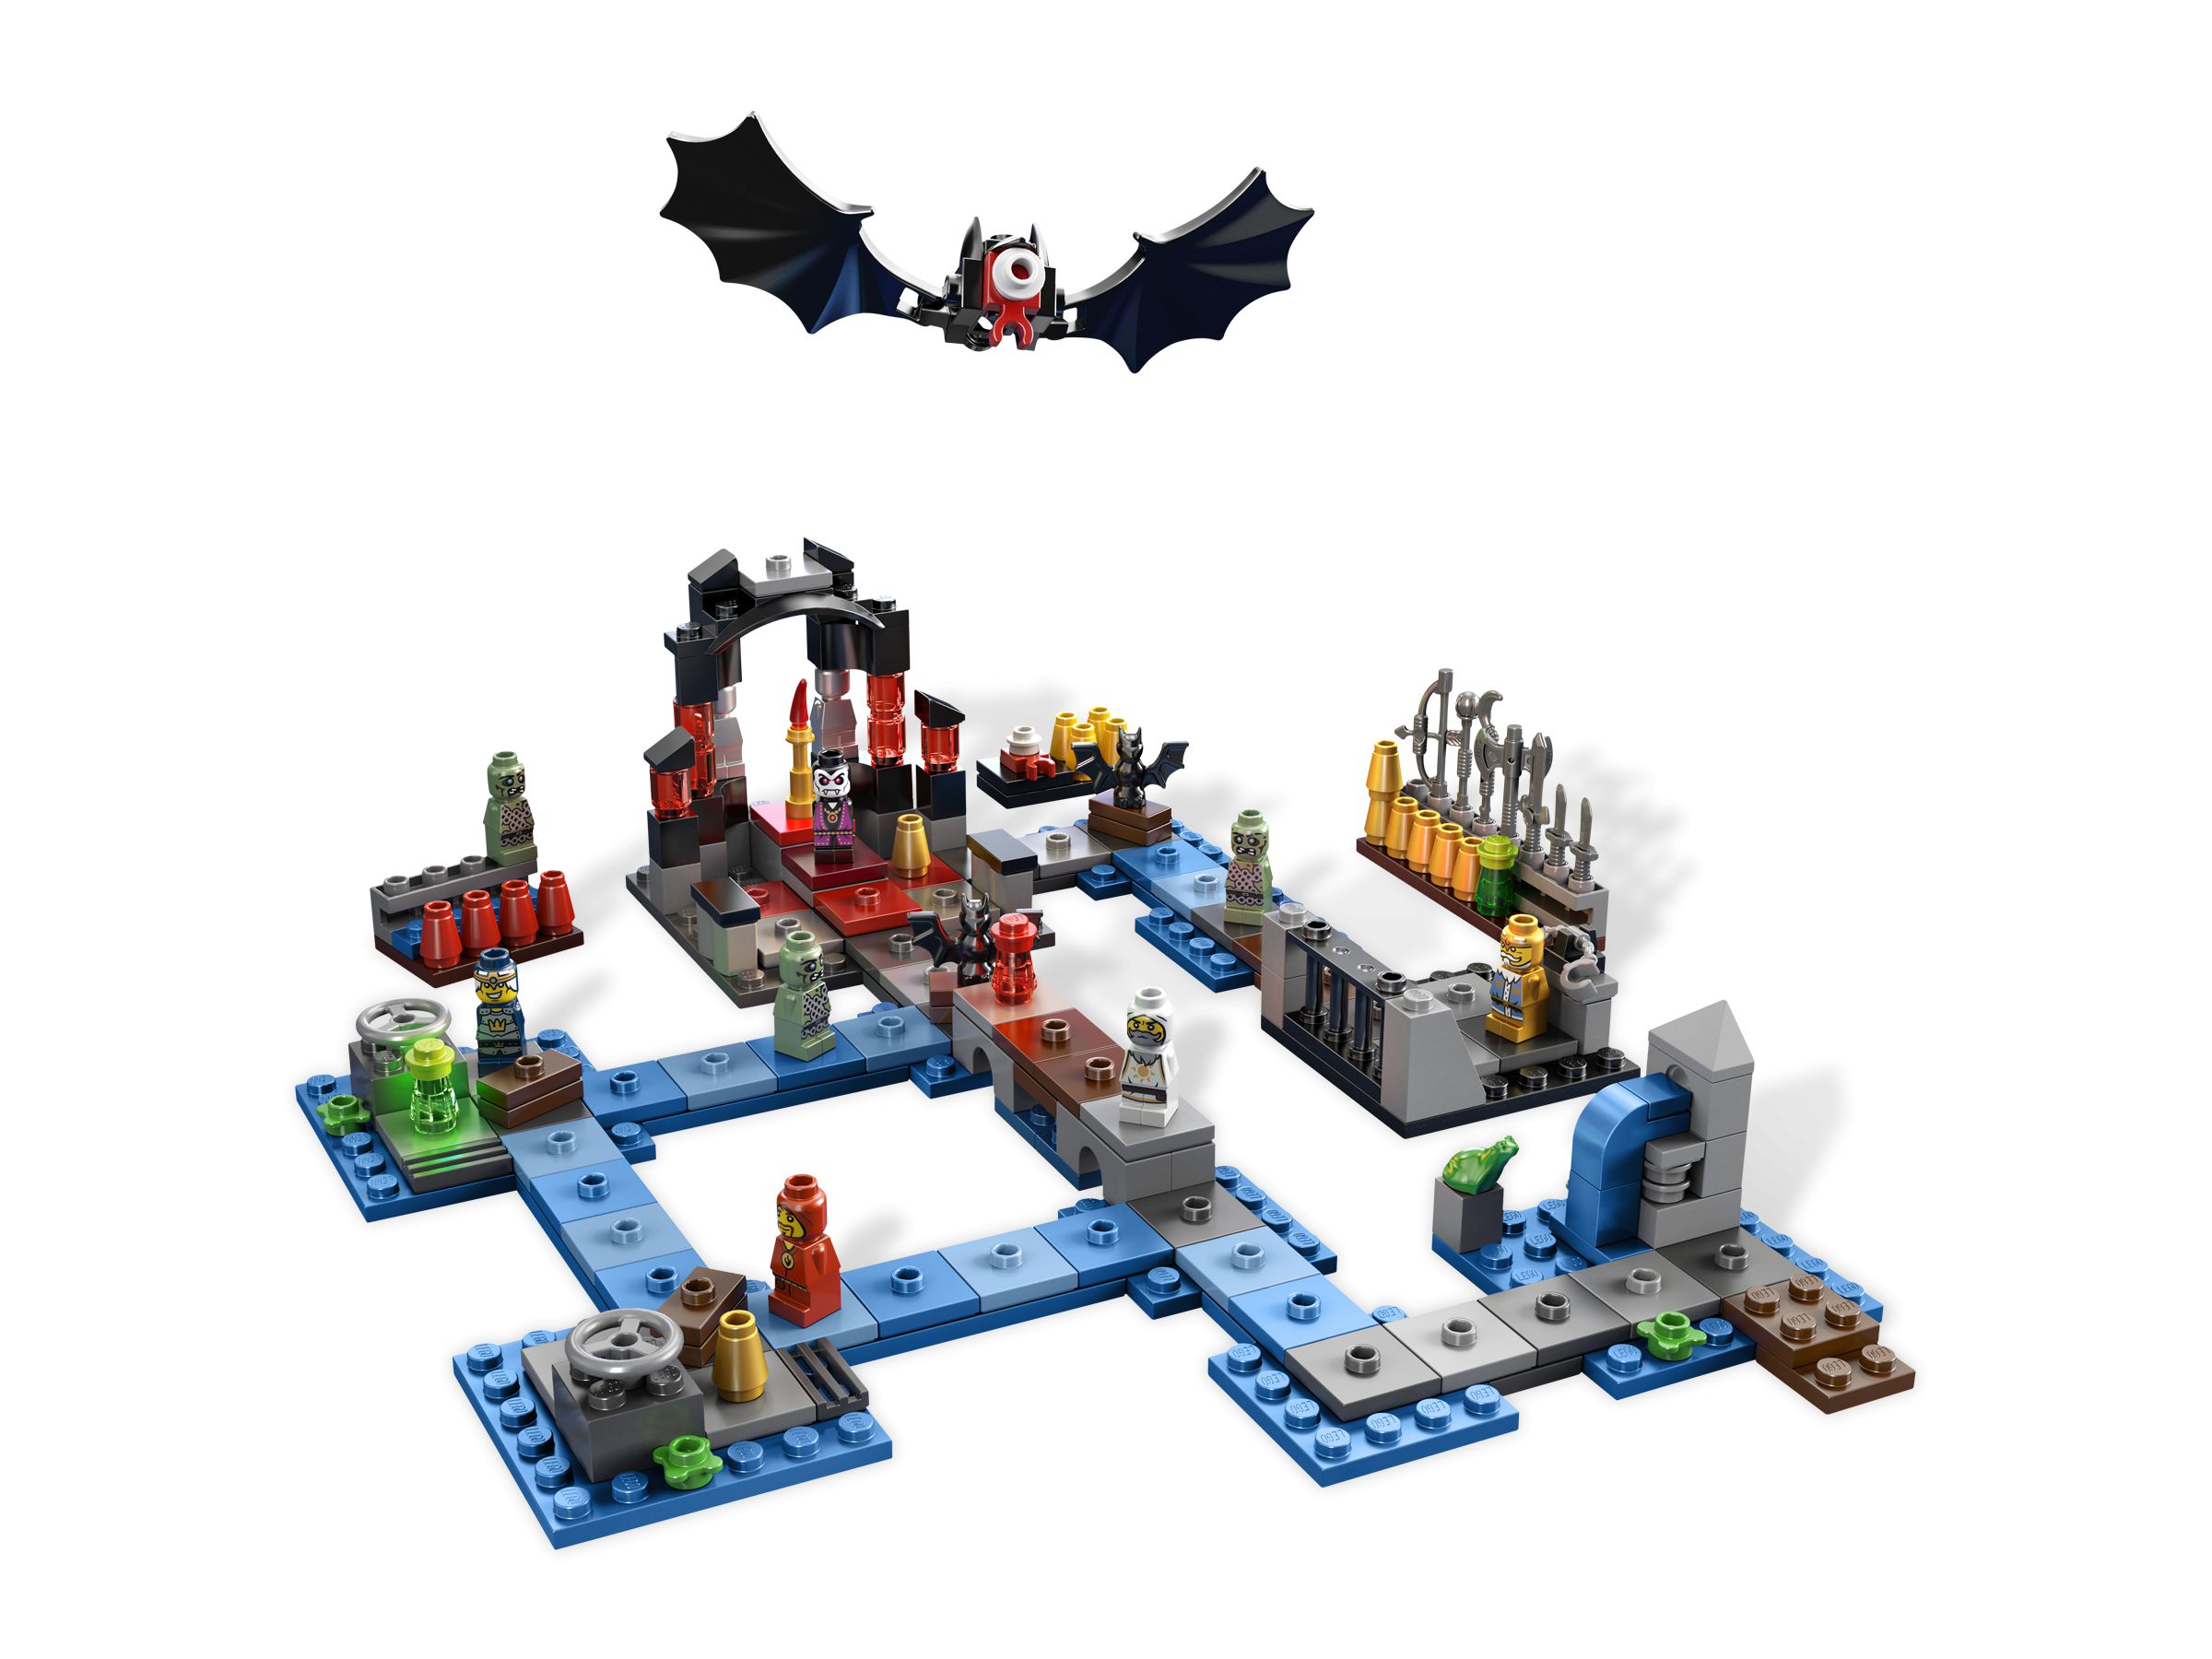 LEGO Games 3874 HEROICA Ilrion LEGO_3874_alt3.jpg